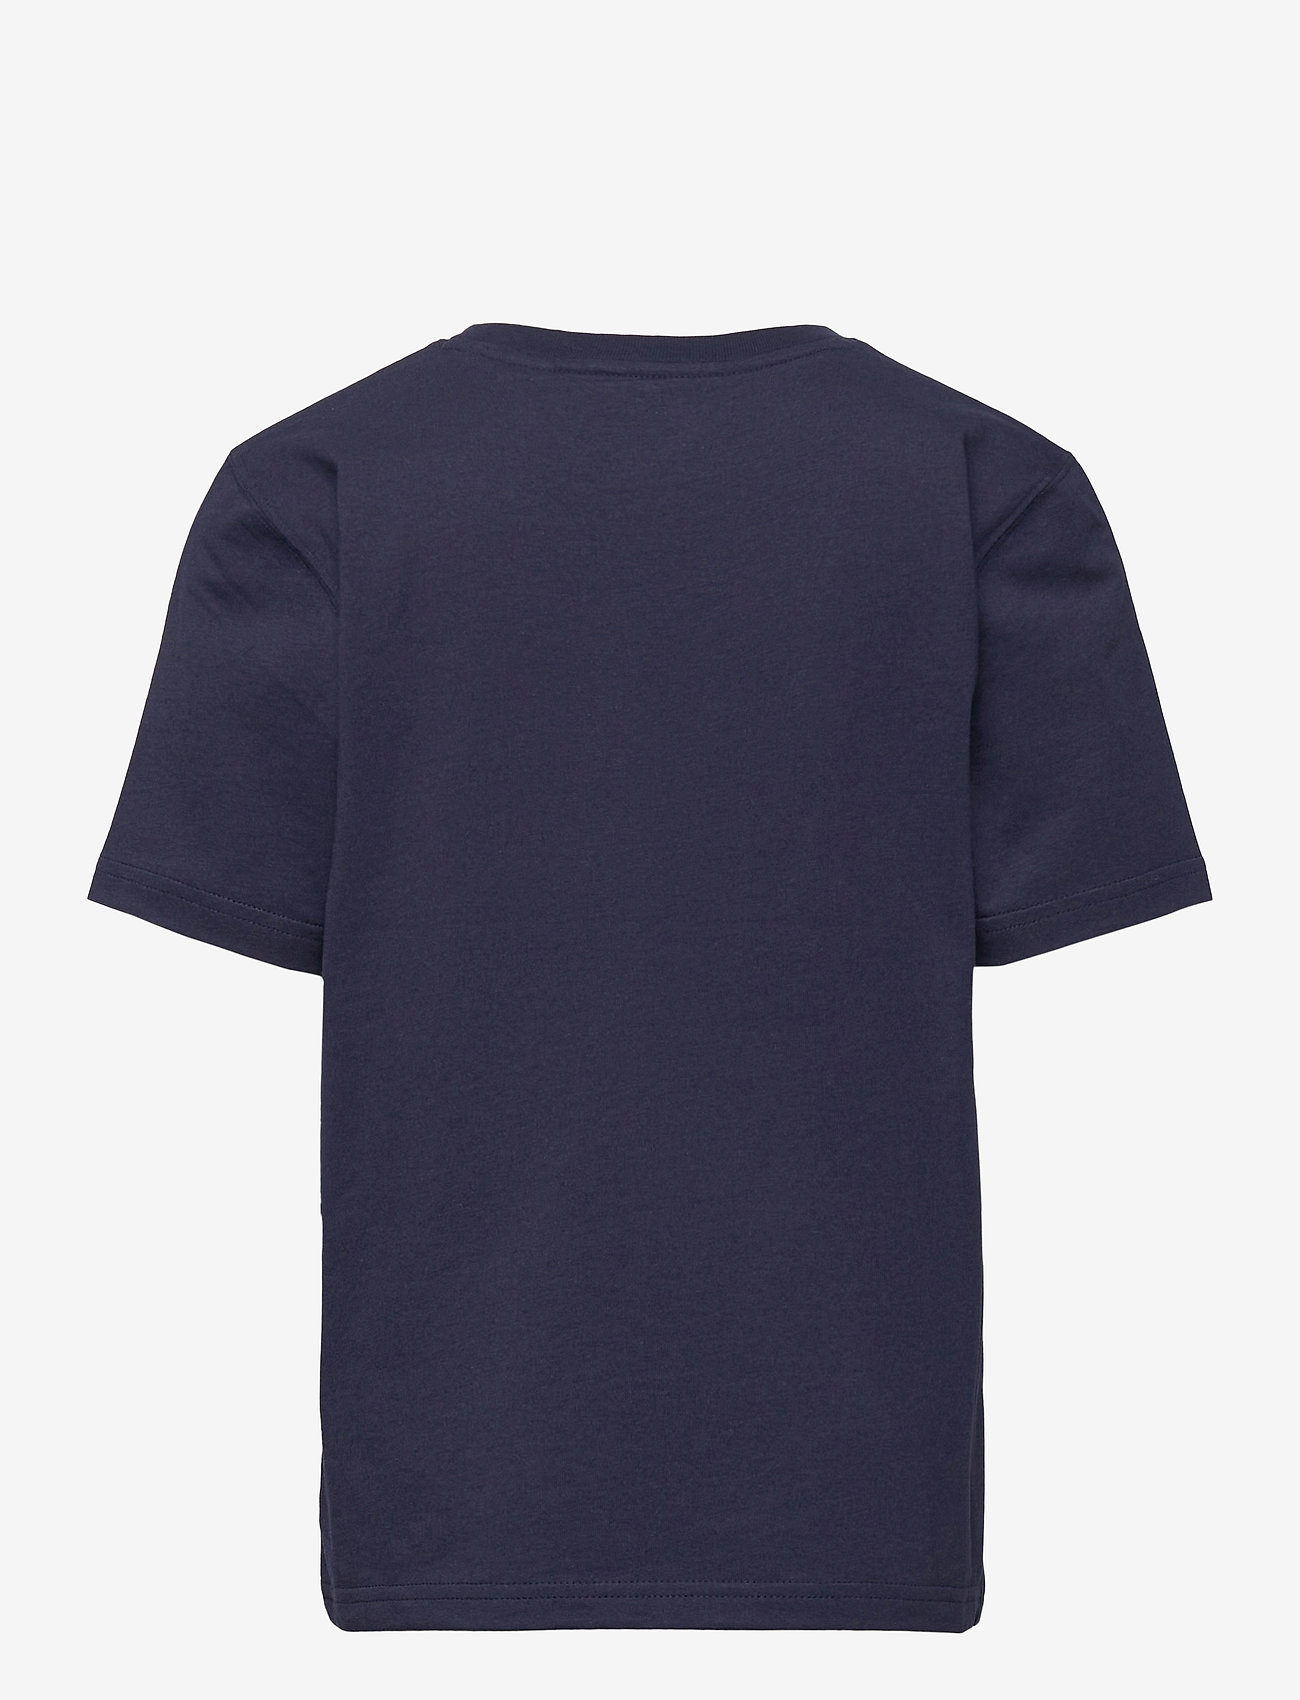 Timberland Short Sleeves Tee Shirt Navy Boozt Com